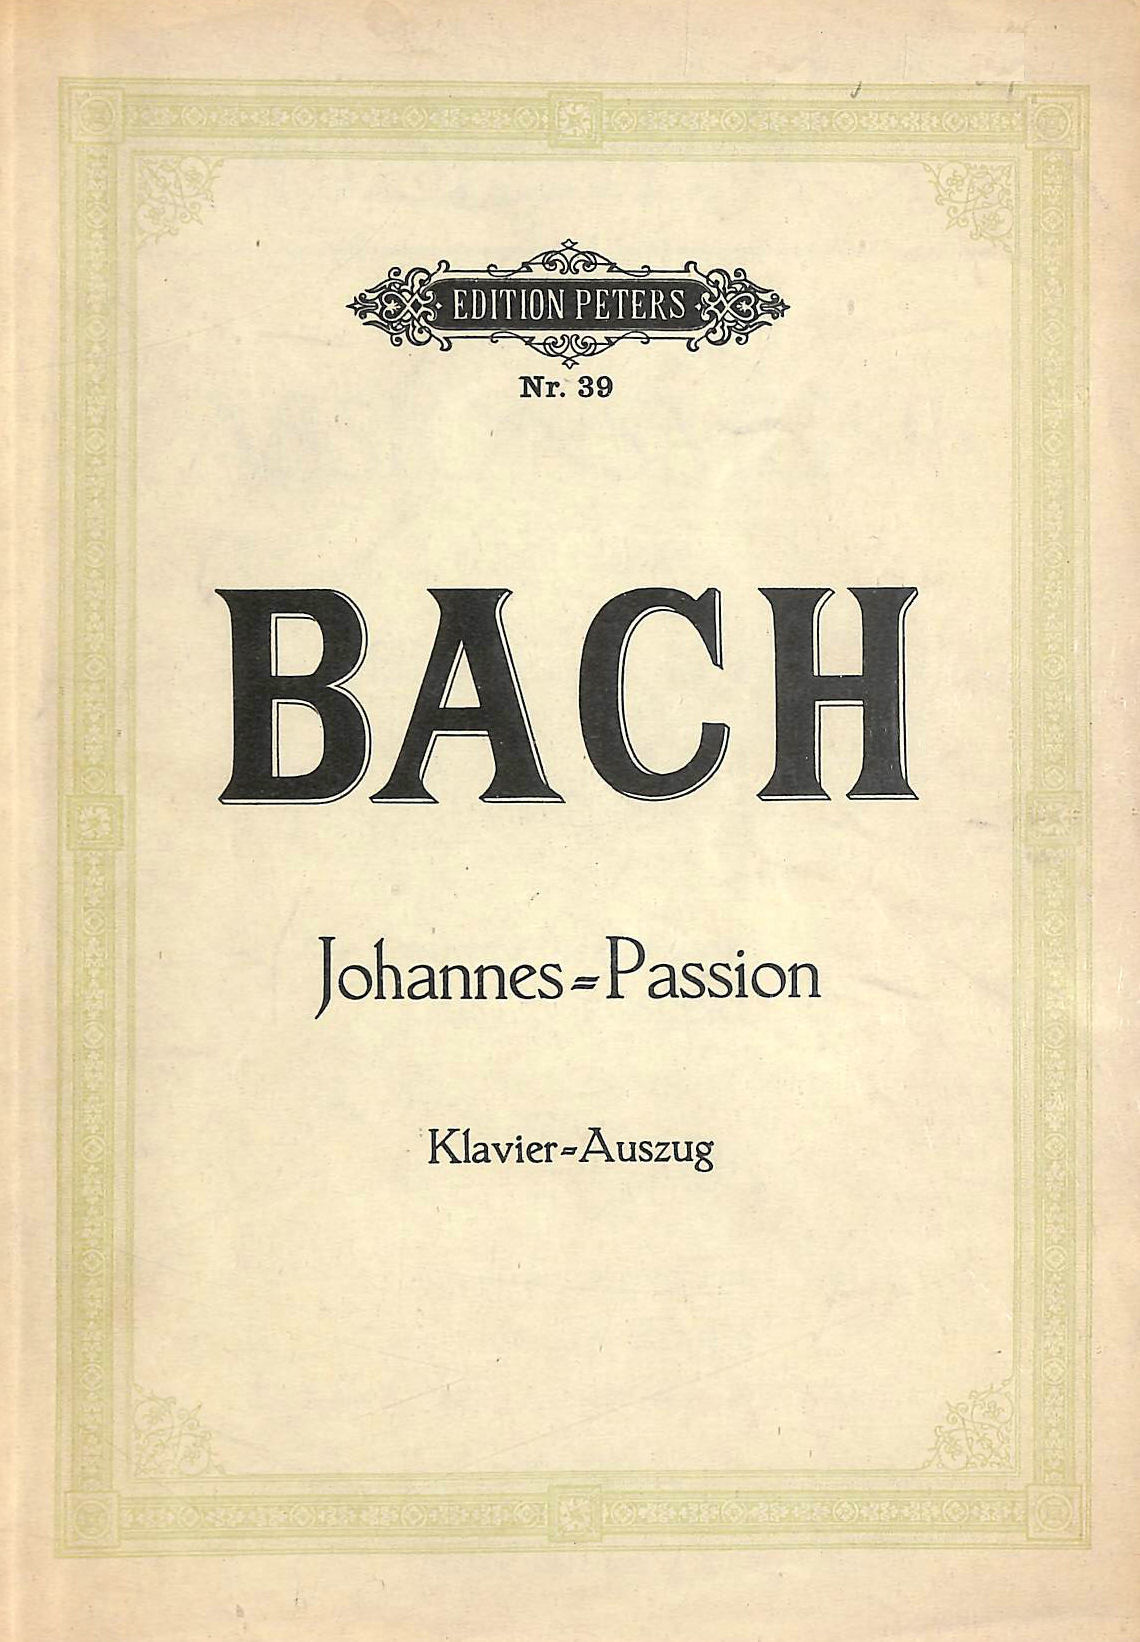 BACH, JOHAN SABASTIAN (PIANO ARRANGEMENTS BY GUSTAV ROSLER) (INTRODUCTION BY HER - Johan Sebastian Bach's Passionsmusik nach dem Evangelisten Johannes - Klavierauszug von Gustav Rosler